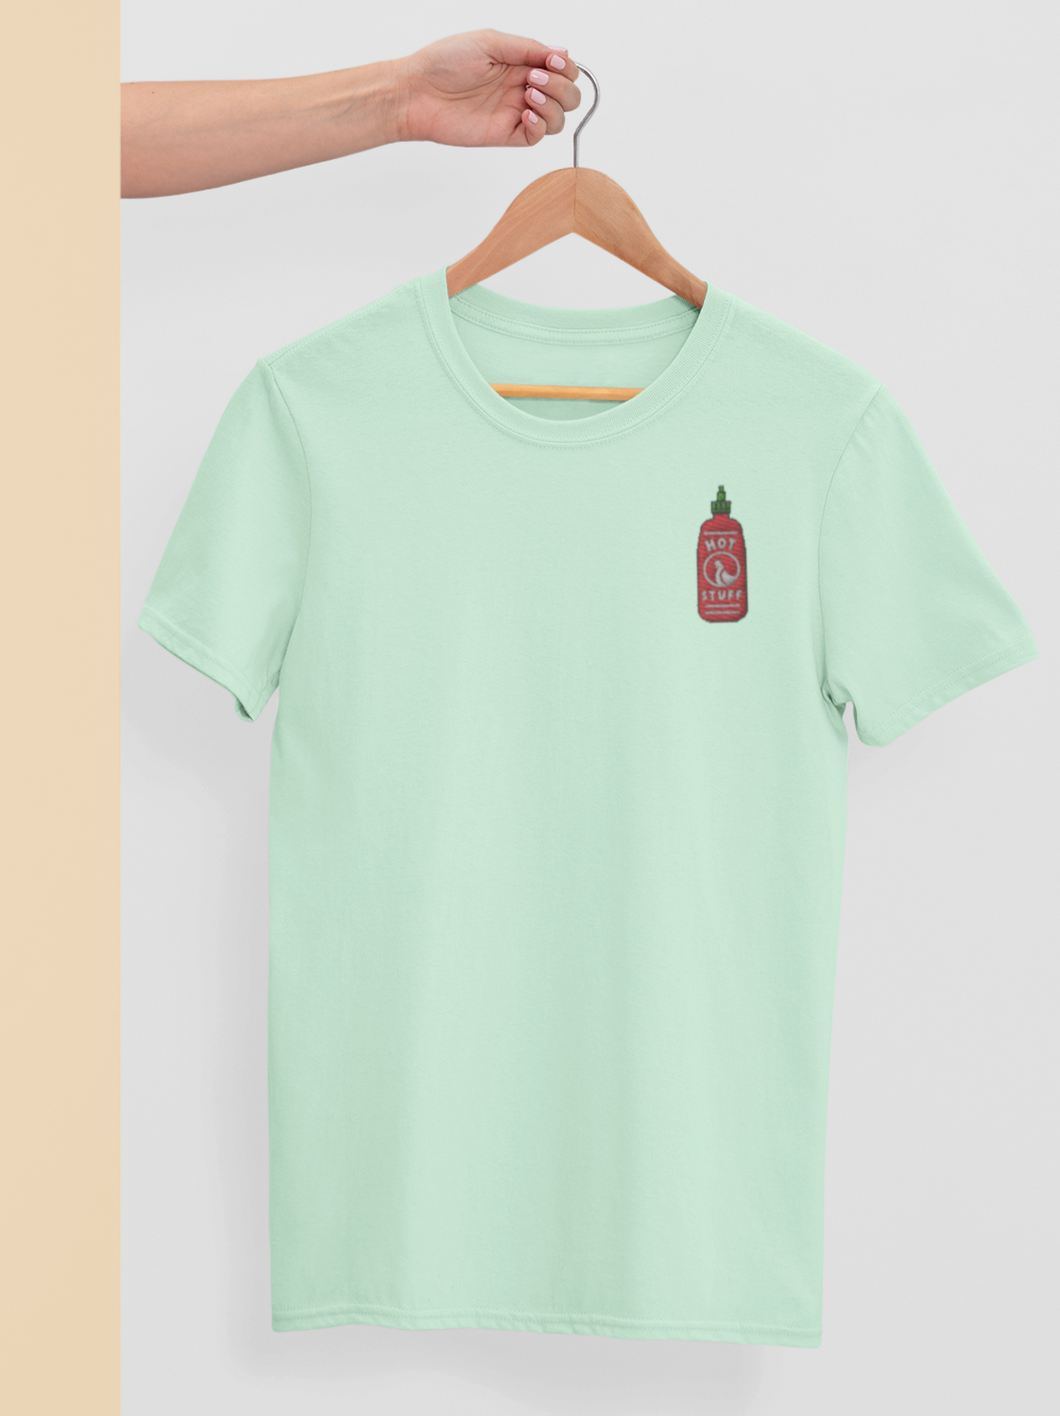 Sriracha shirt on a hanger